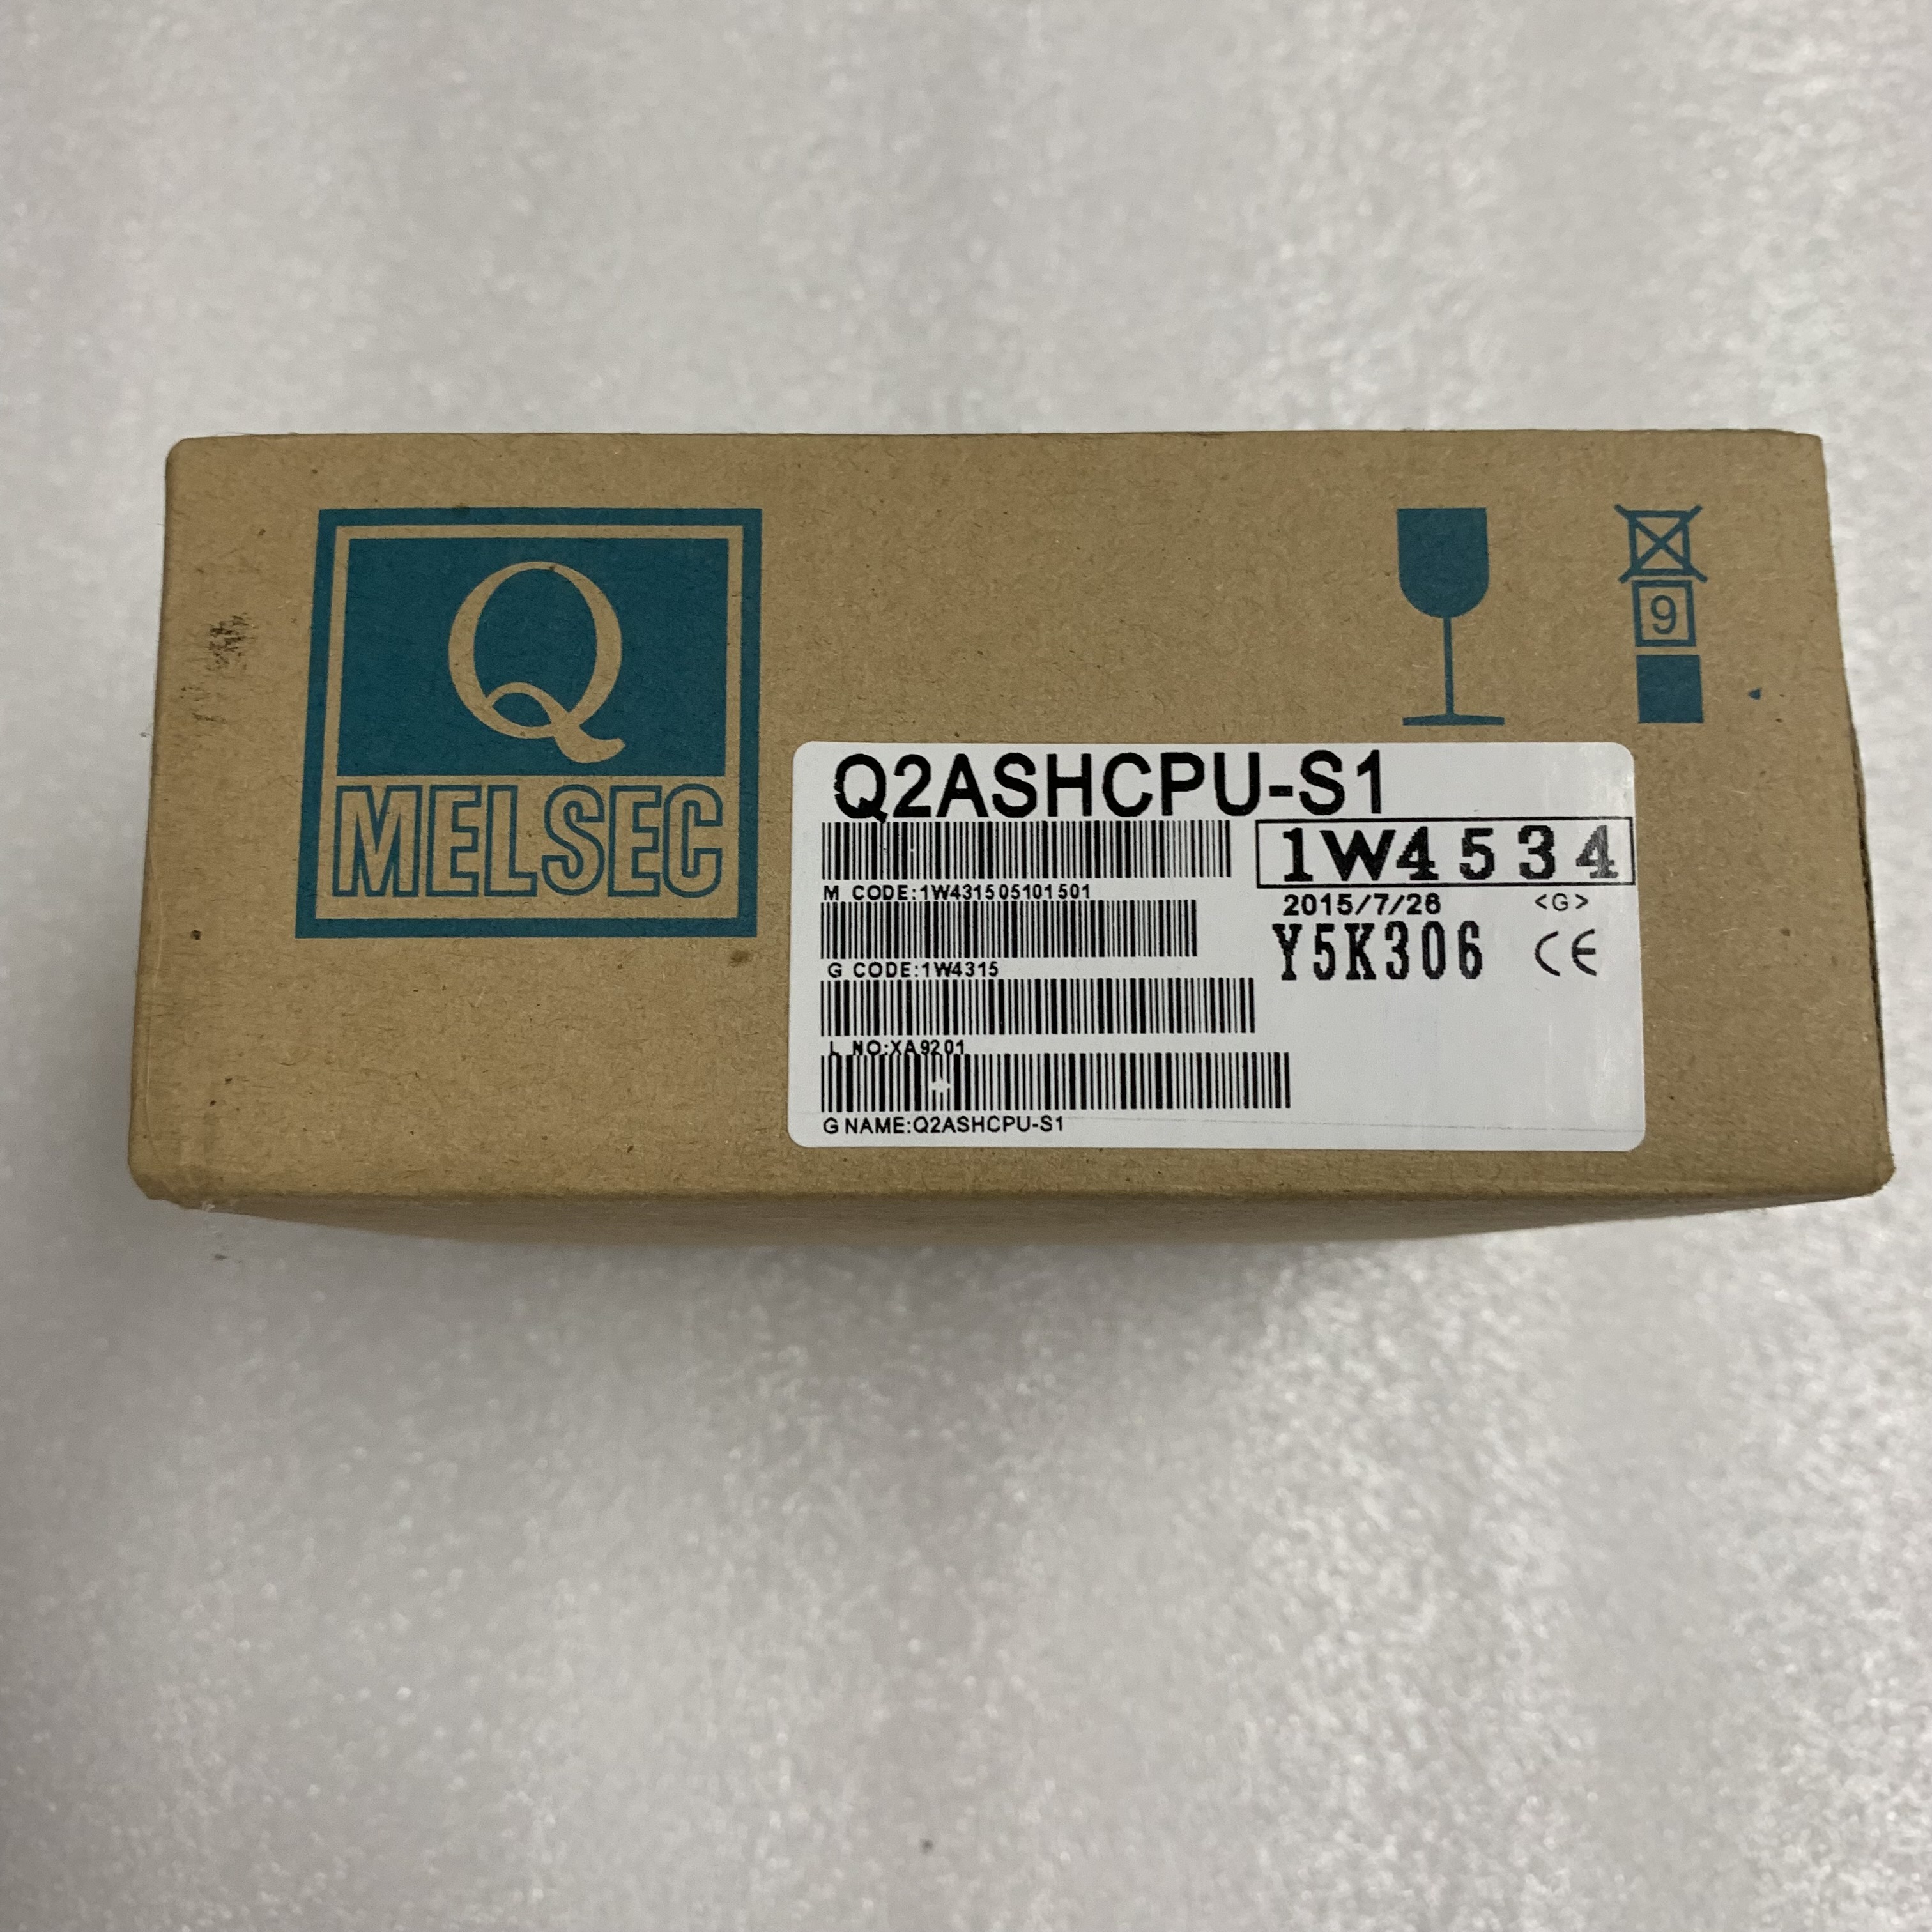 Mitsubishi Q2ASHCPU-S1 CPU 1024 I/O 60K STEPS MPE NEW